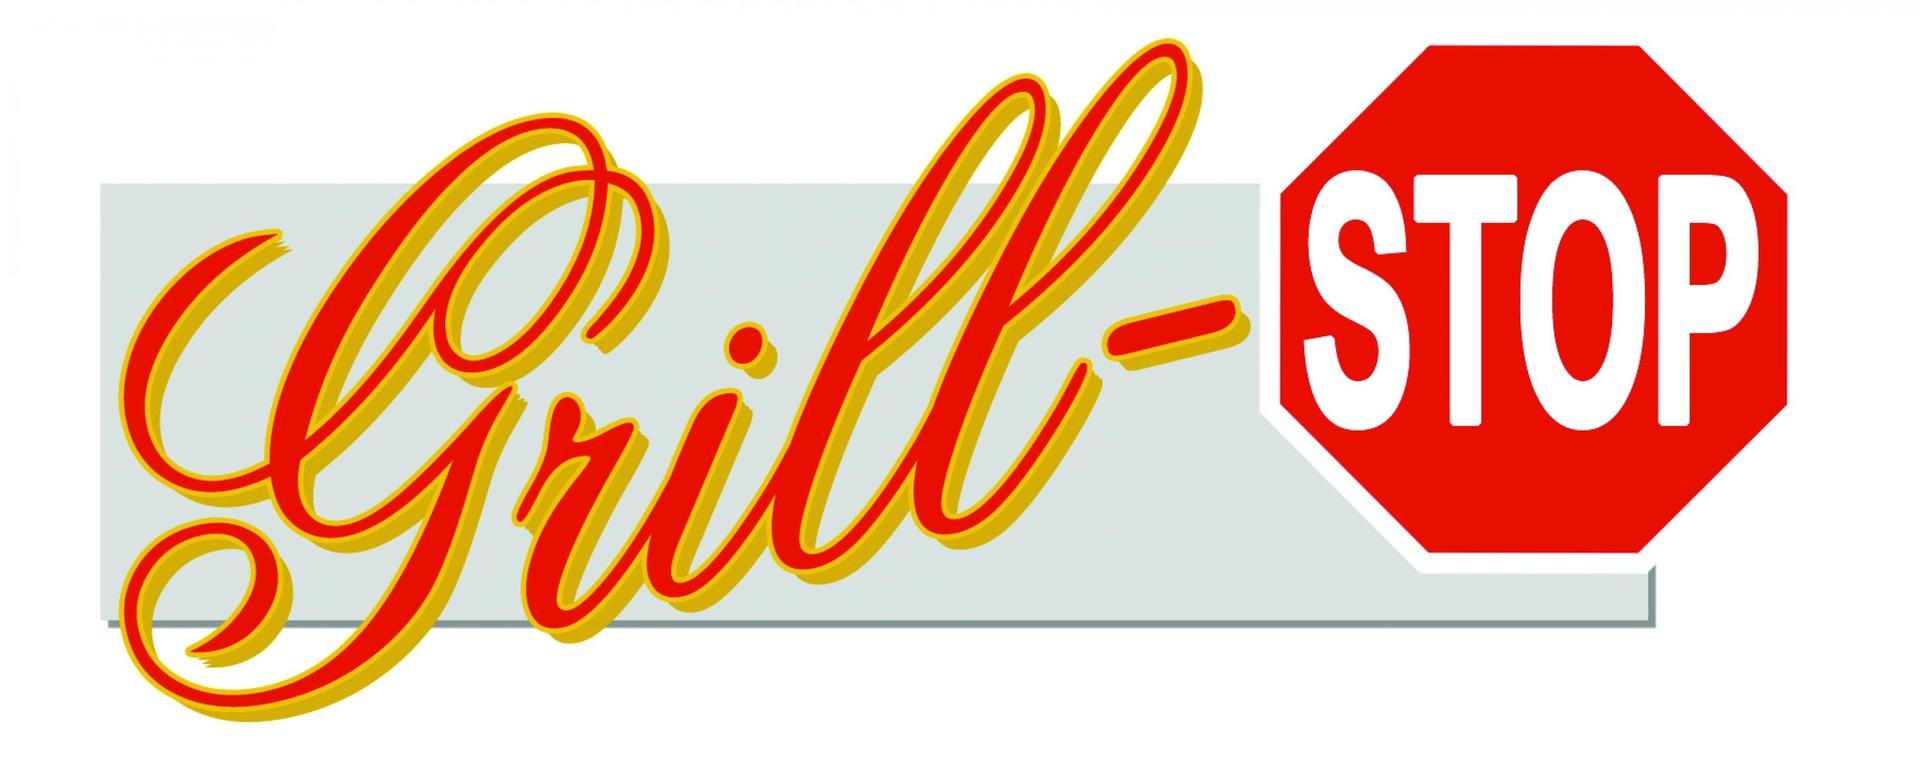 Grill-Stop » Essen in Wuppertal